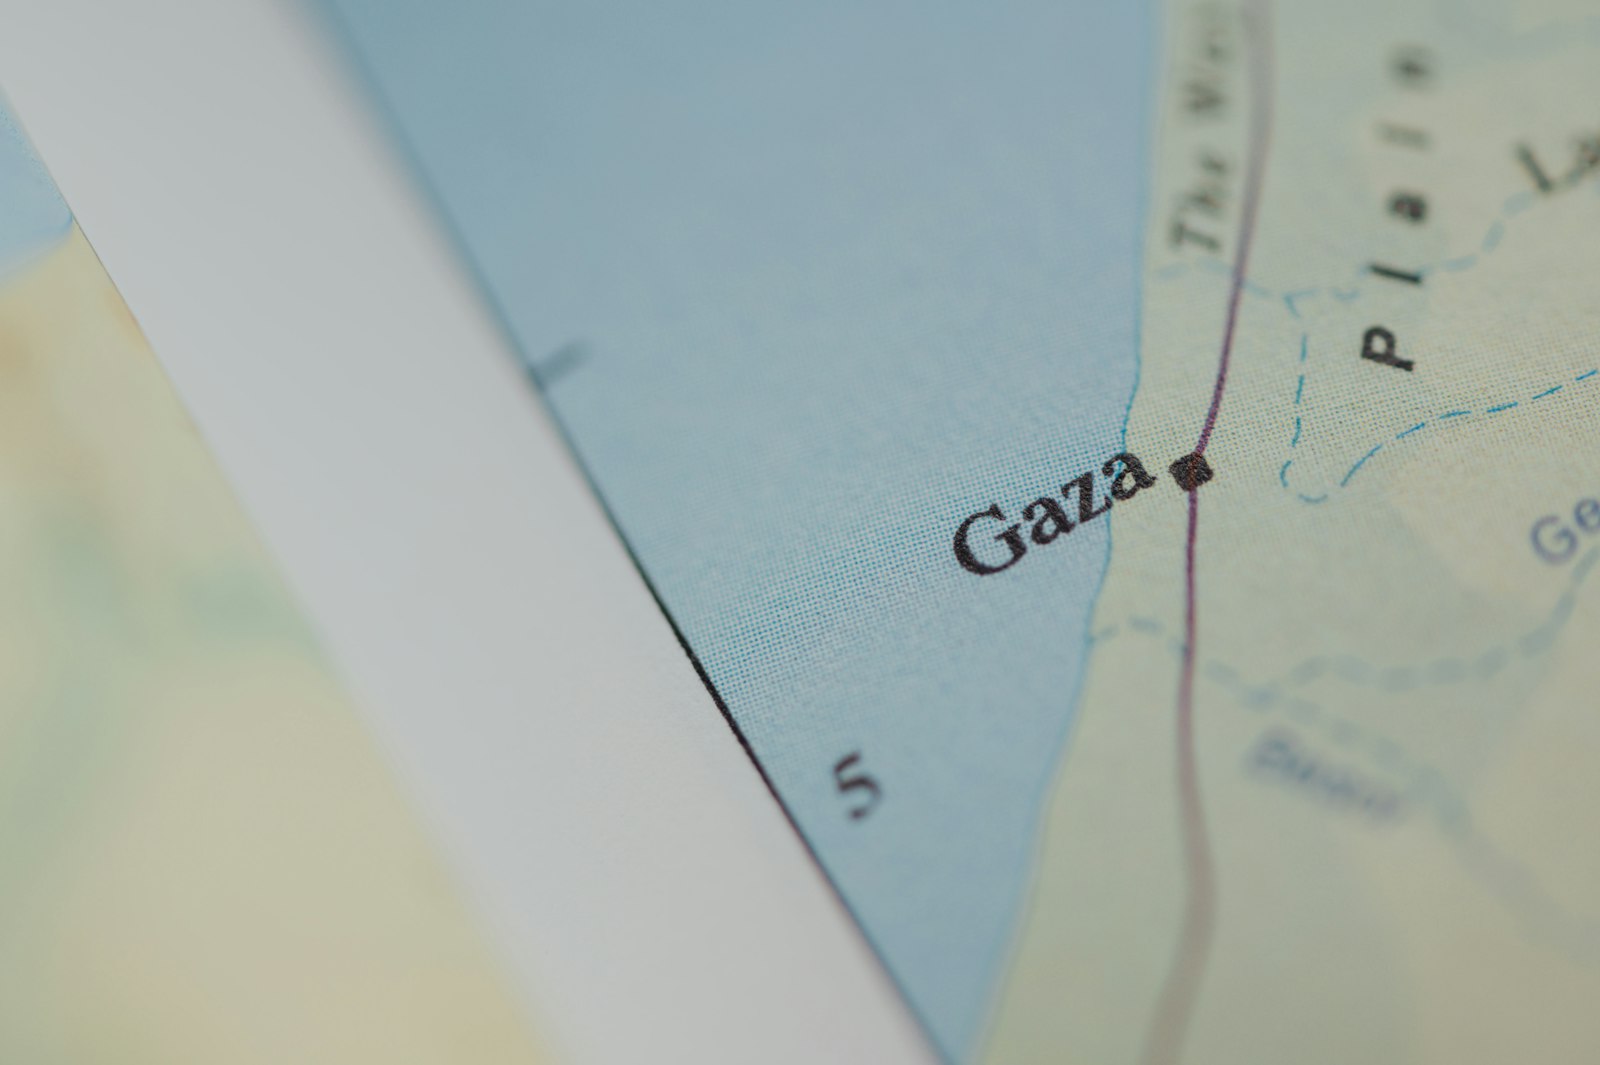 Statement on the Israel-Gaza Crisis